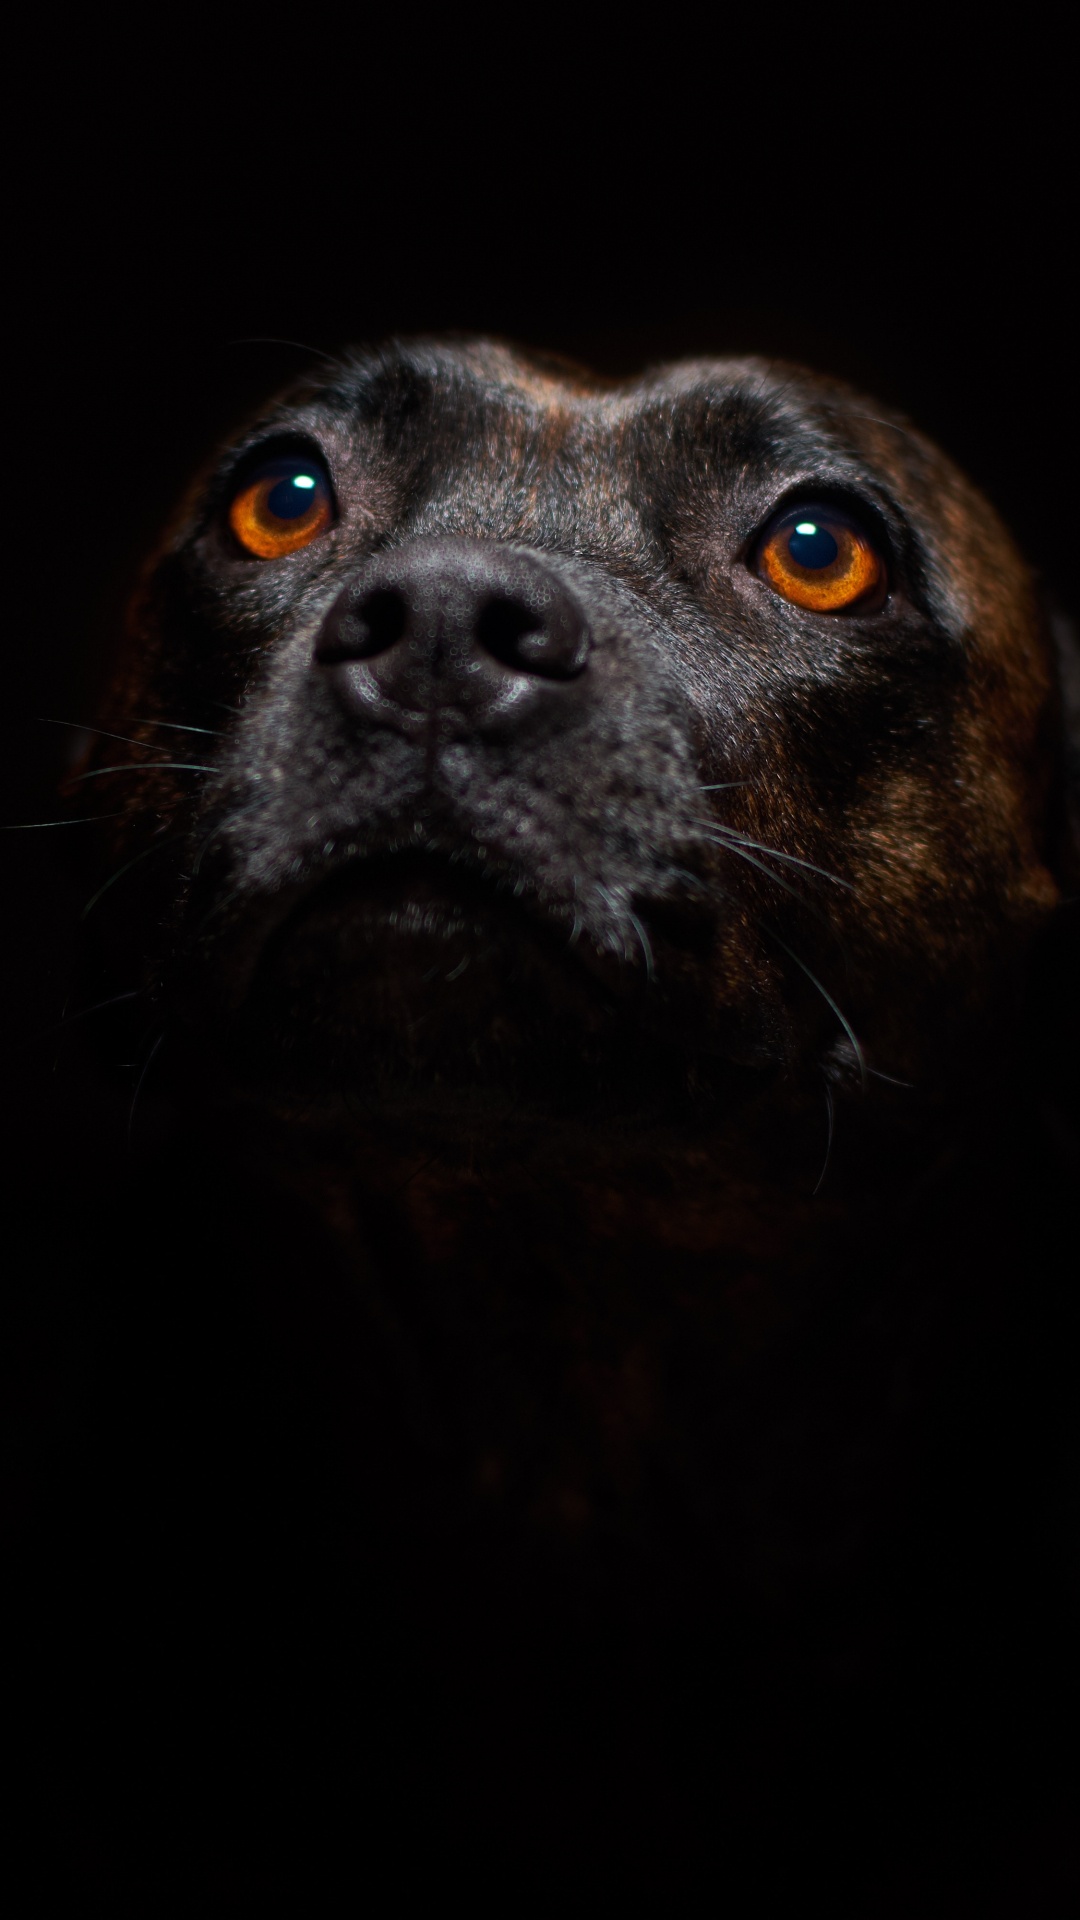 Black Short Coated Medium Sized Dog. Wallpaper in 1080x1920 Resolution